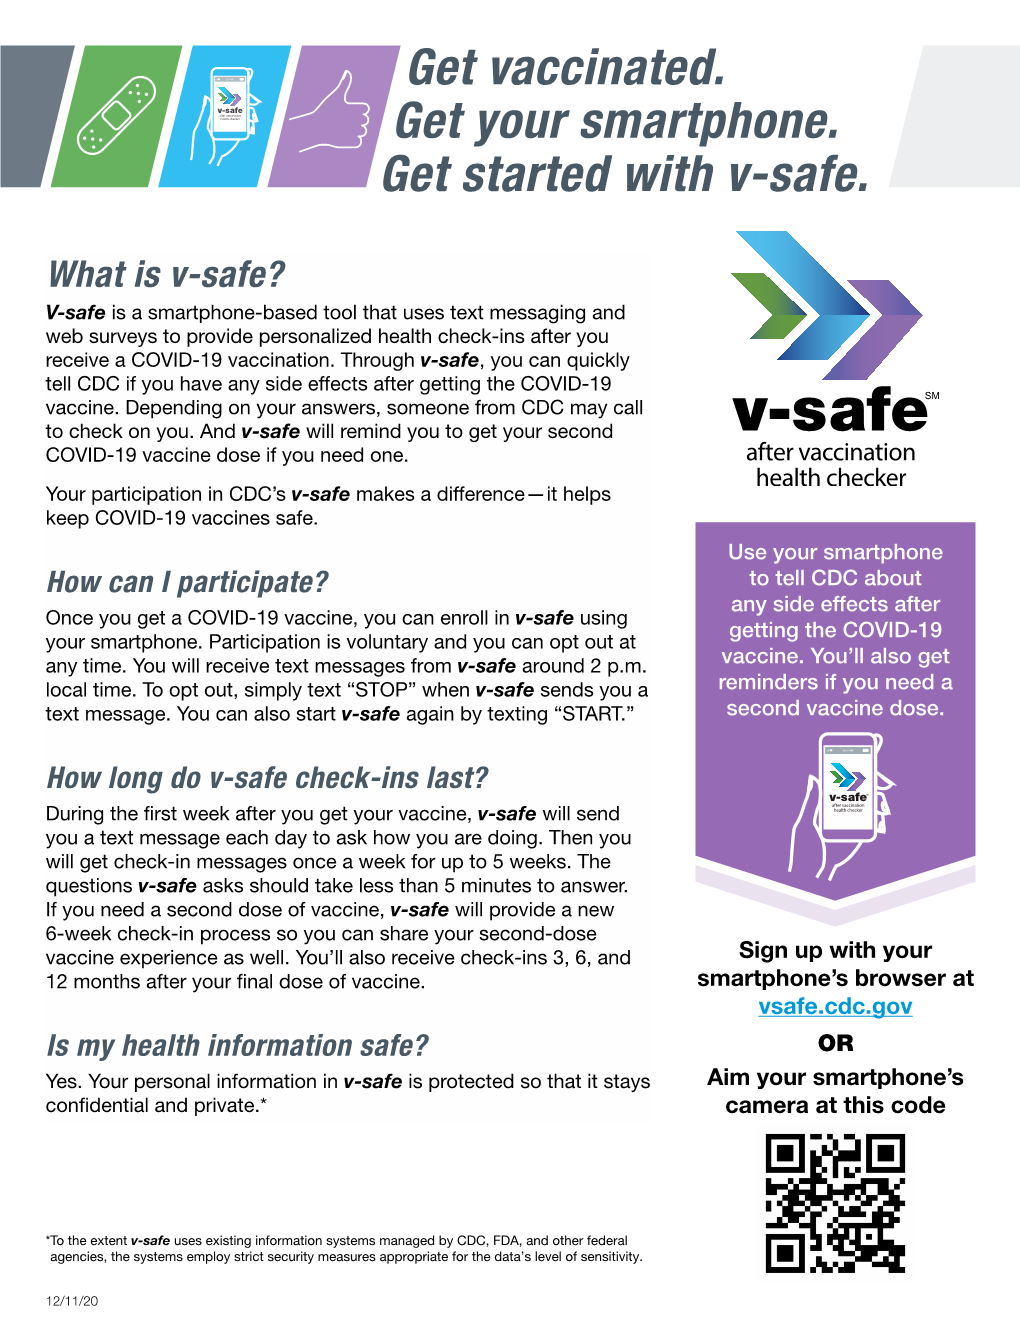 Get Vaccinated. Get Your Smartphone. Get Started with V-Safe